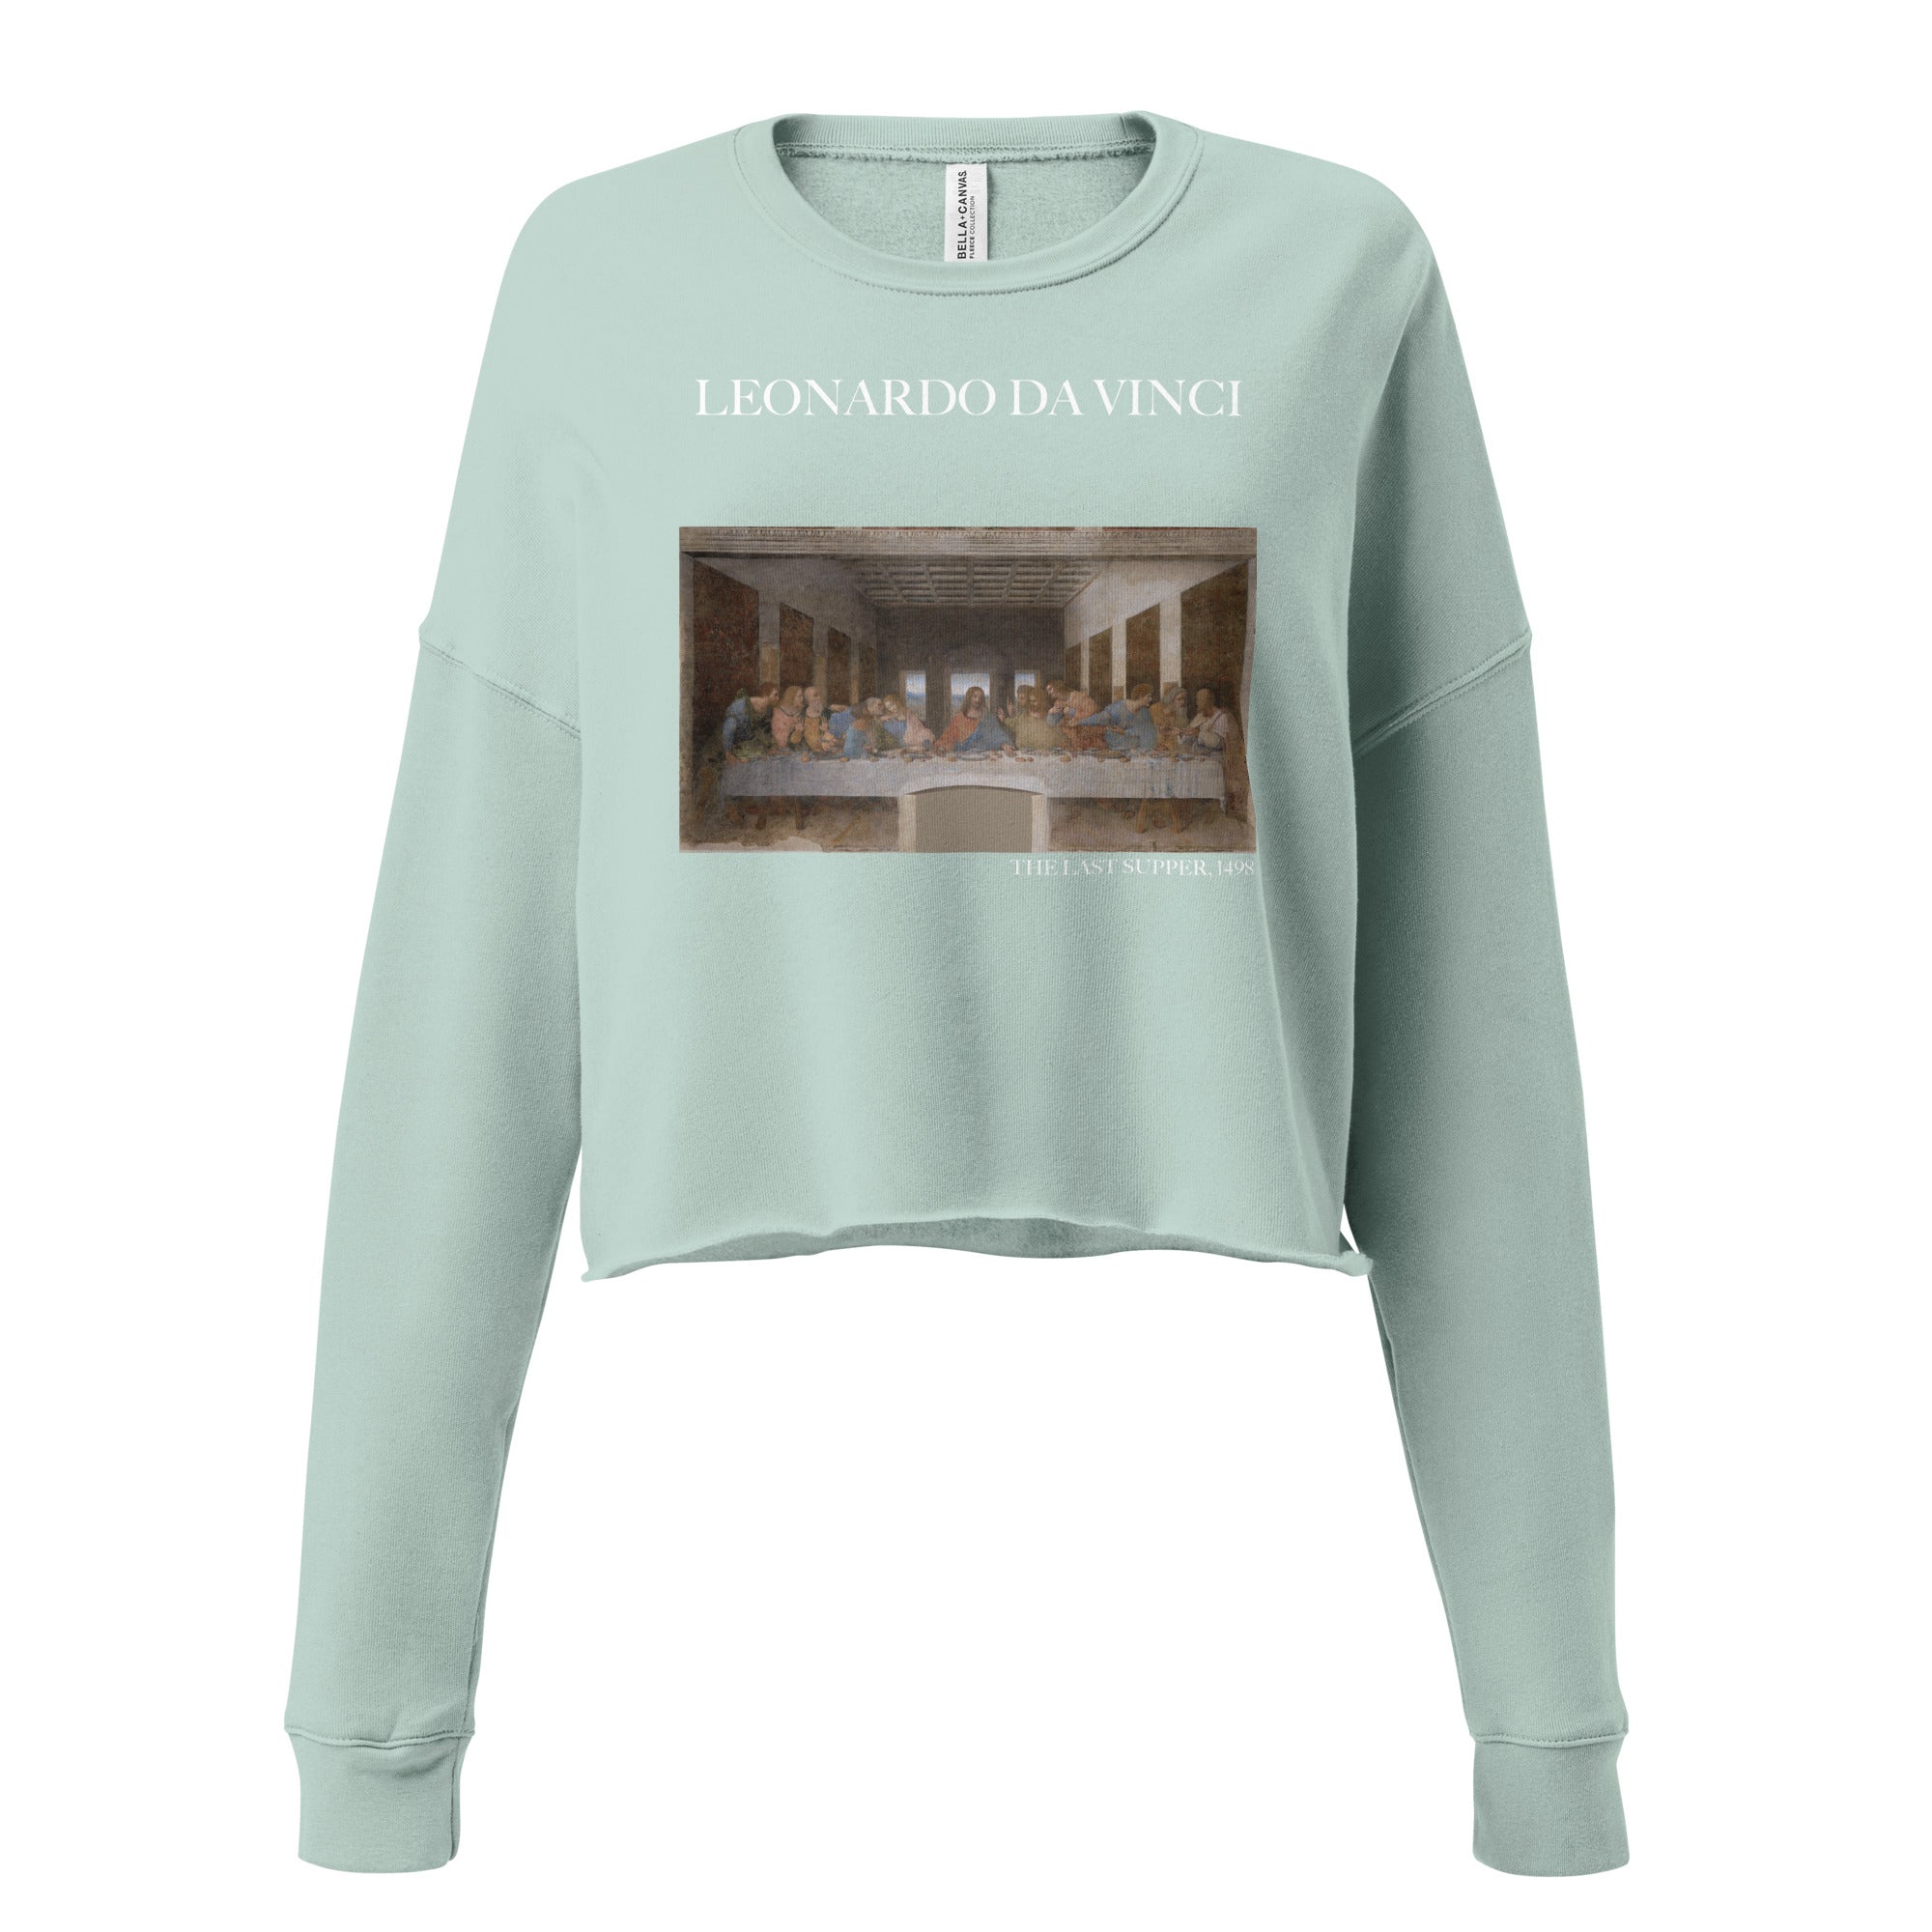 Leonardo da Vinci 'The Last Supper' Famous Painting Cropped Sweatshirt | Premium Art Cropped Sweatshirt